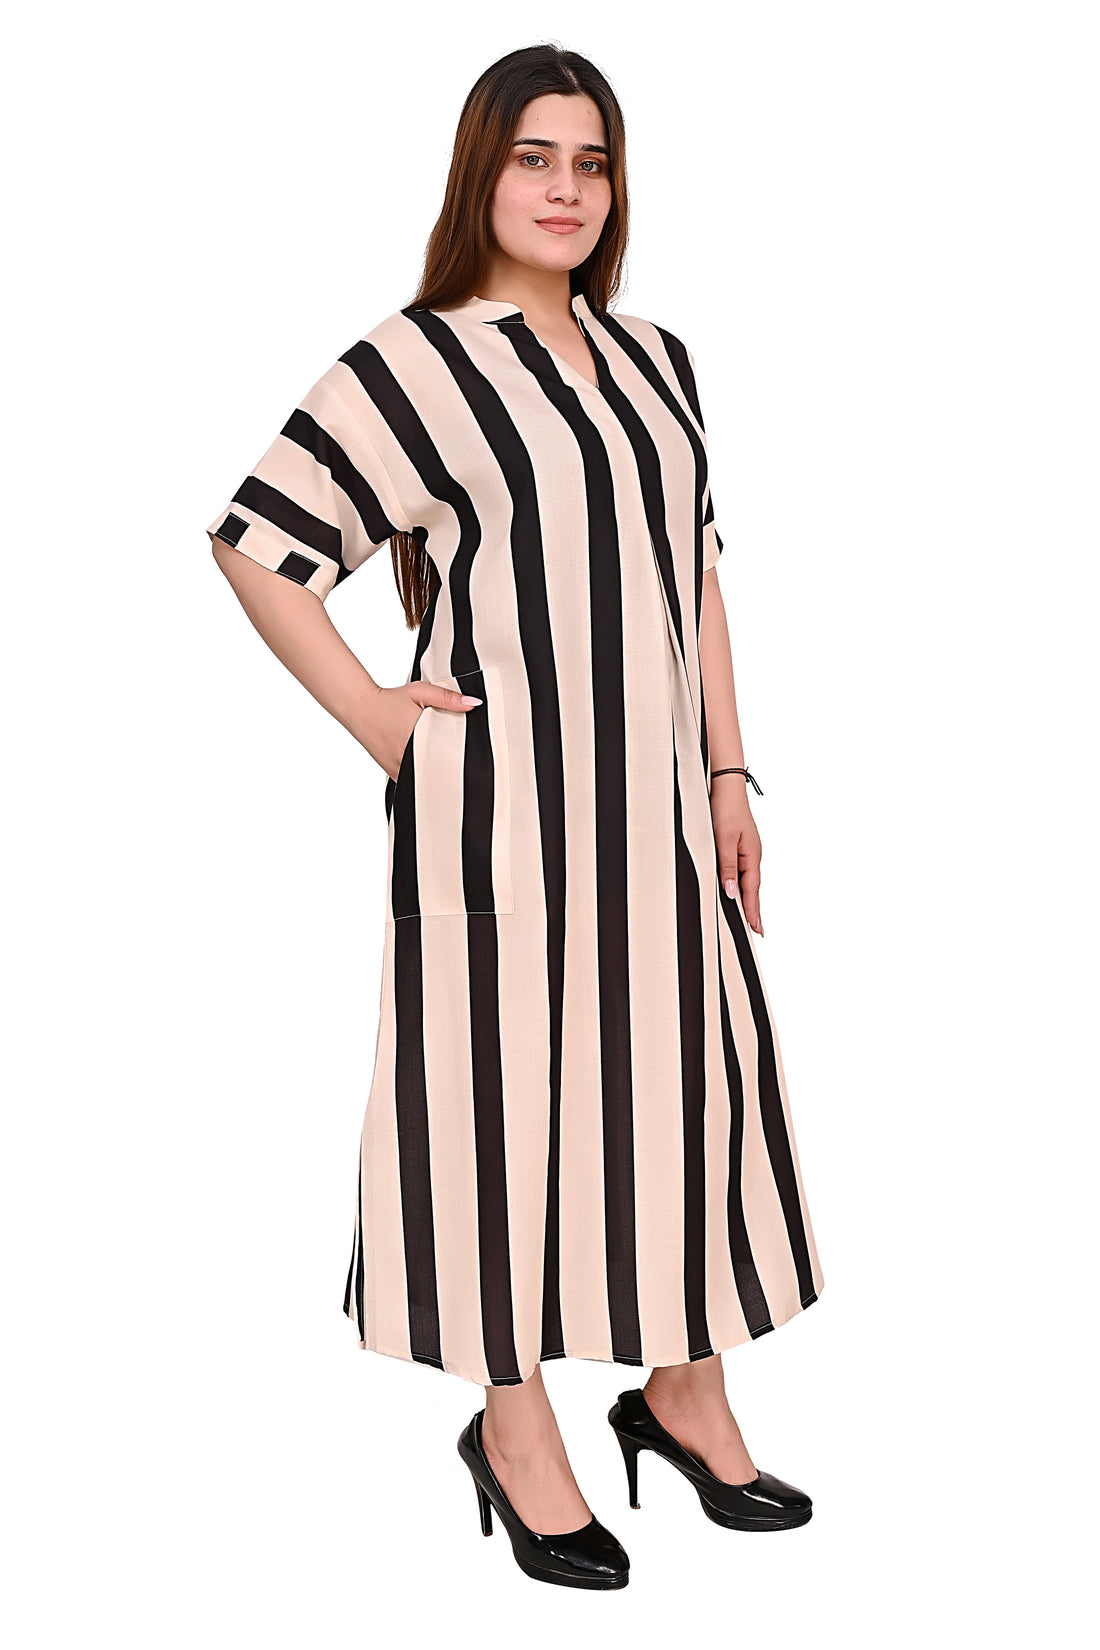 Nirmal online Premium quality digital printed stripe tunic Dress for Women in black & white stripe